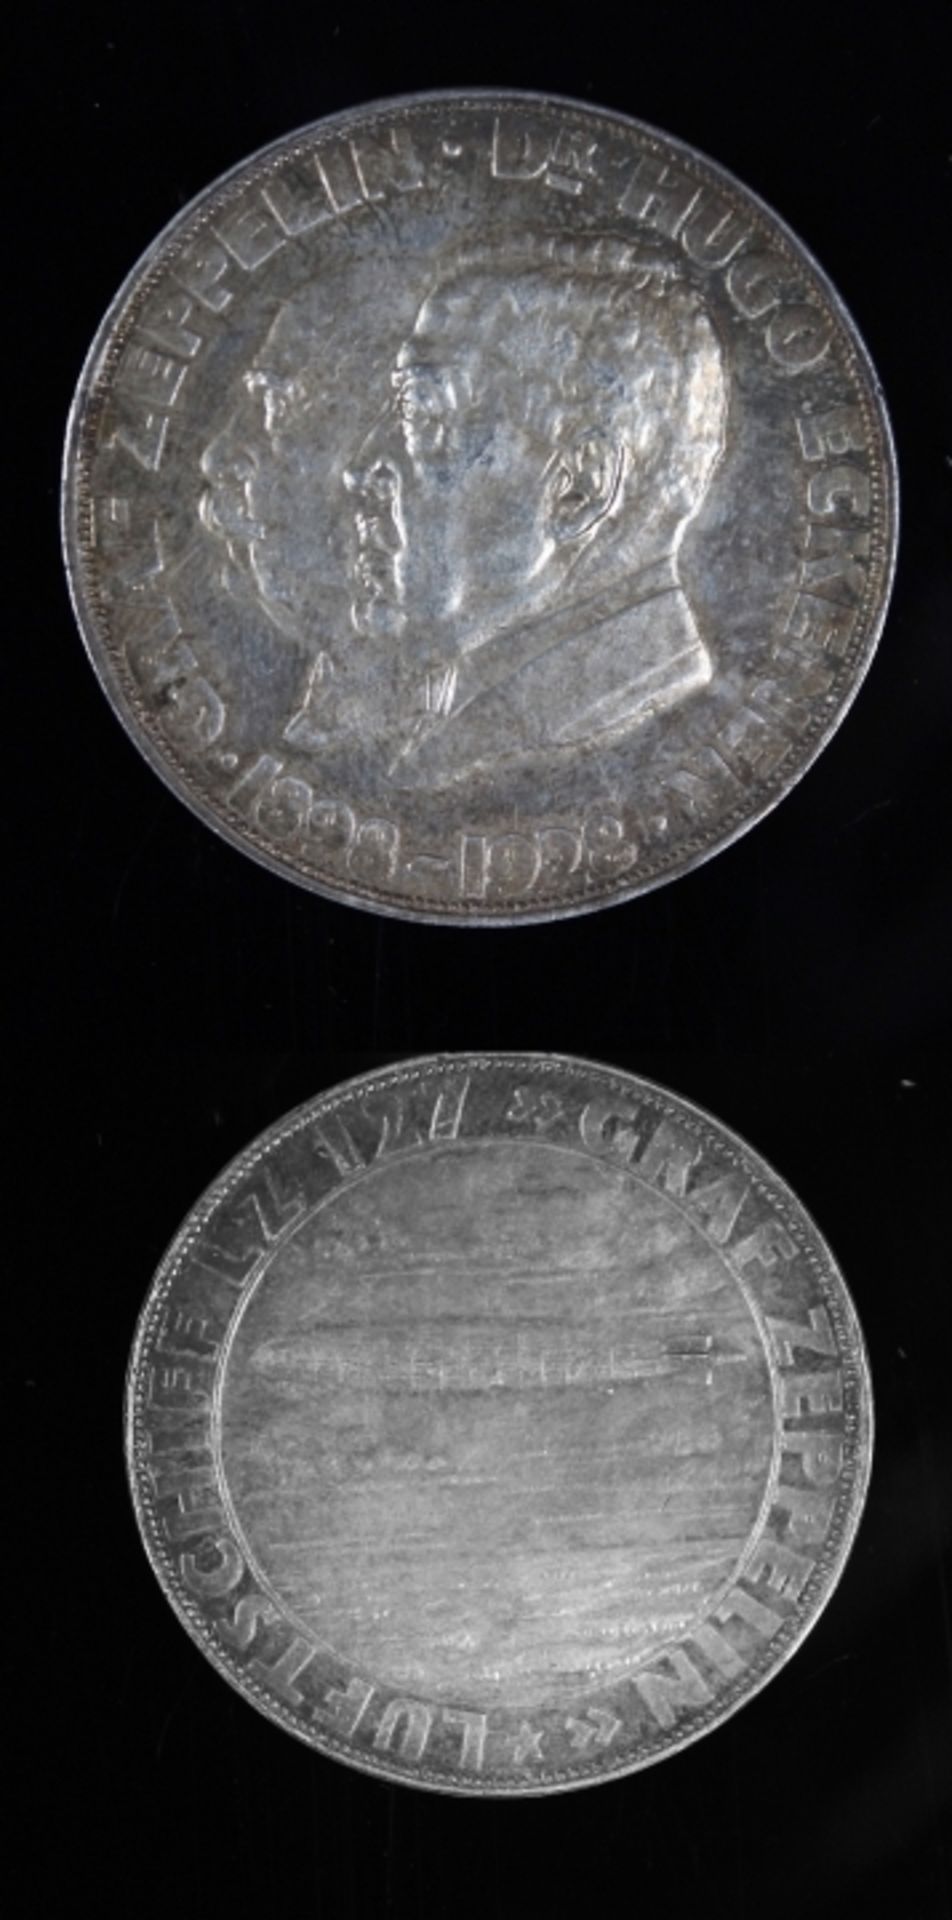 Zeppelin-Medaille Preussische Staatsmünze, 900 Silber, " Luftschiff LZ 127 Graf Zeppelin ", Vs: Graf